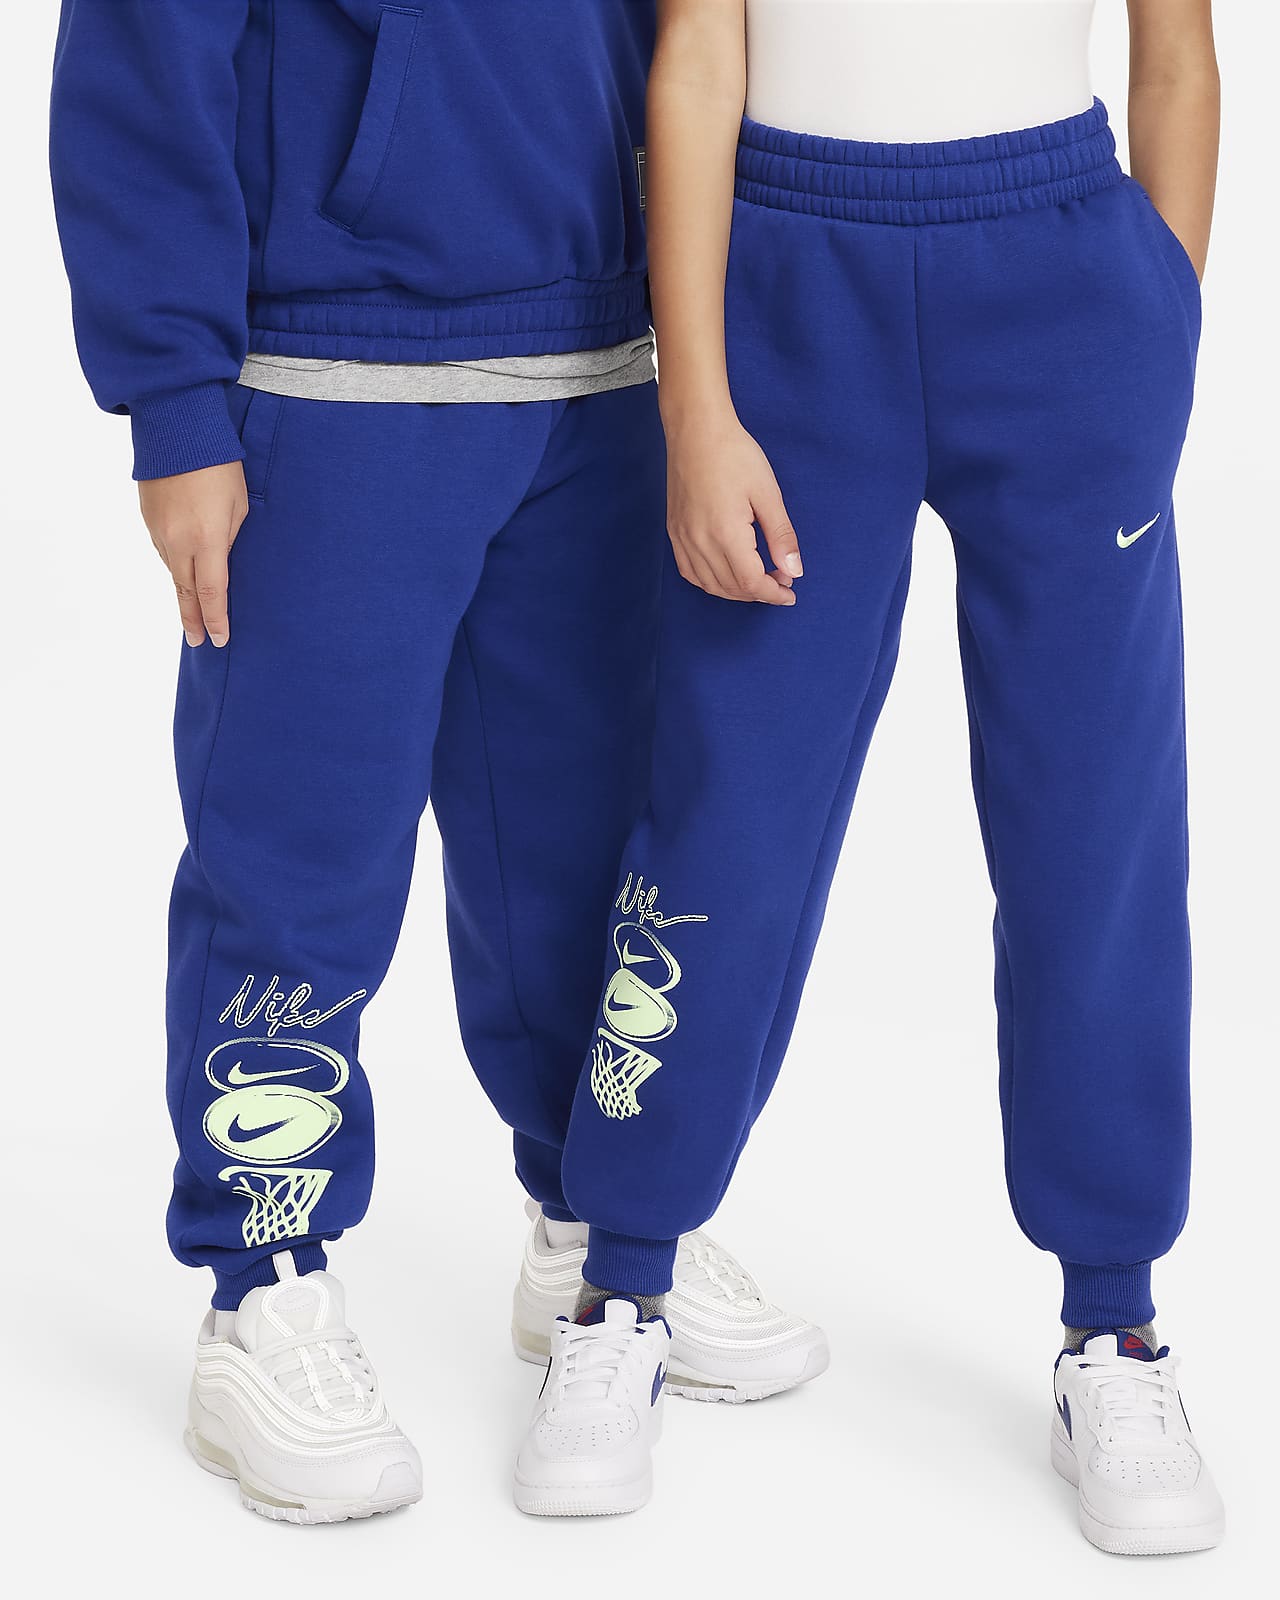 Nike Culture of Basketball Pantalons de teixit Fleece - Nen/a